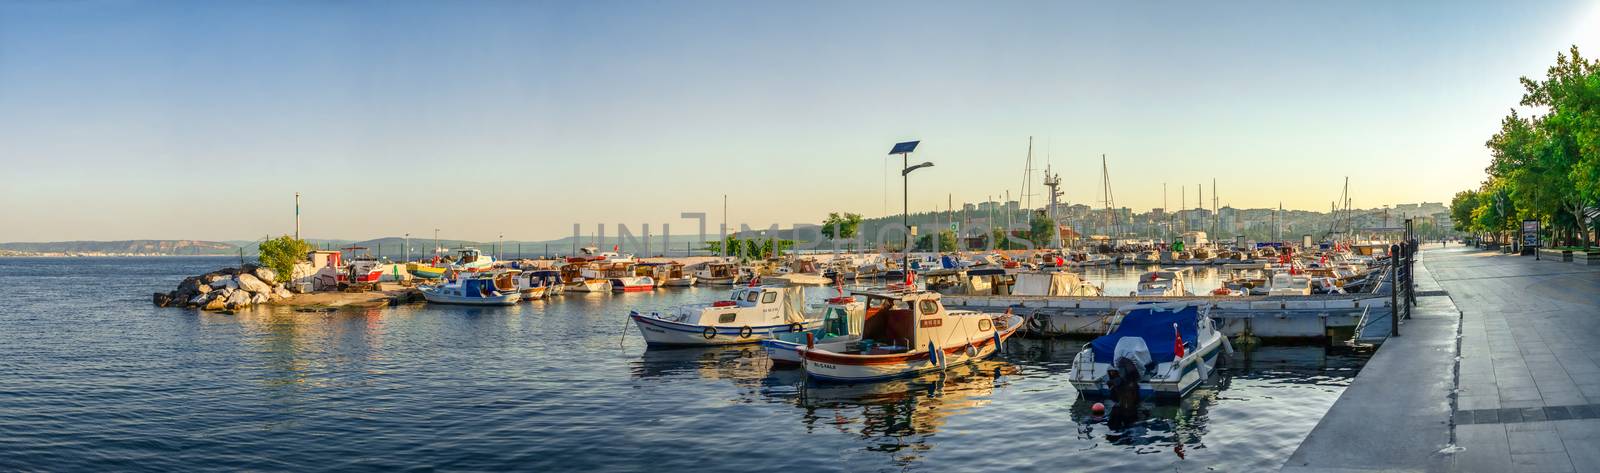 Canakkale marina in Turkey by Multipedia